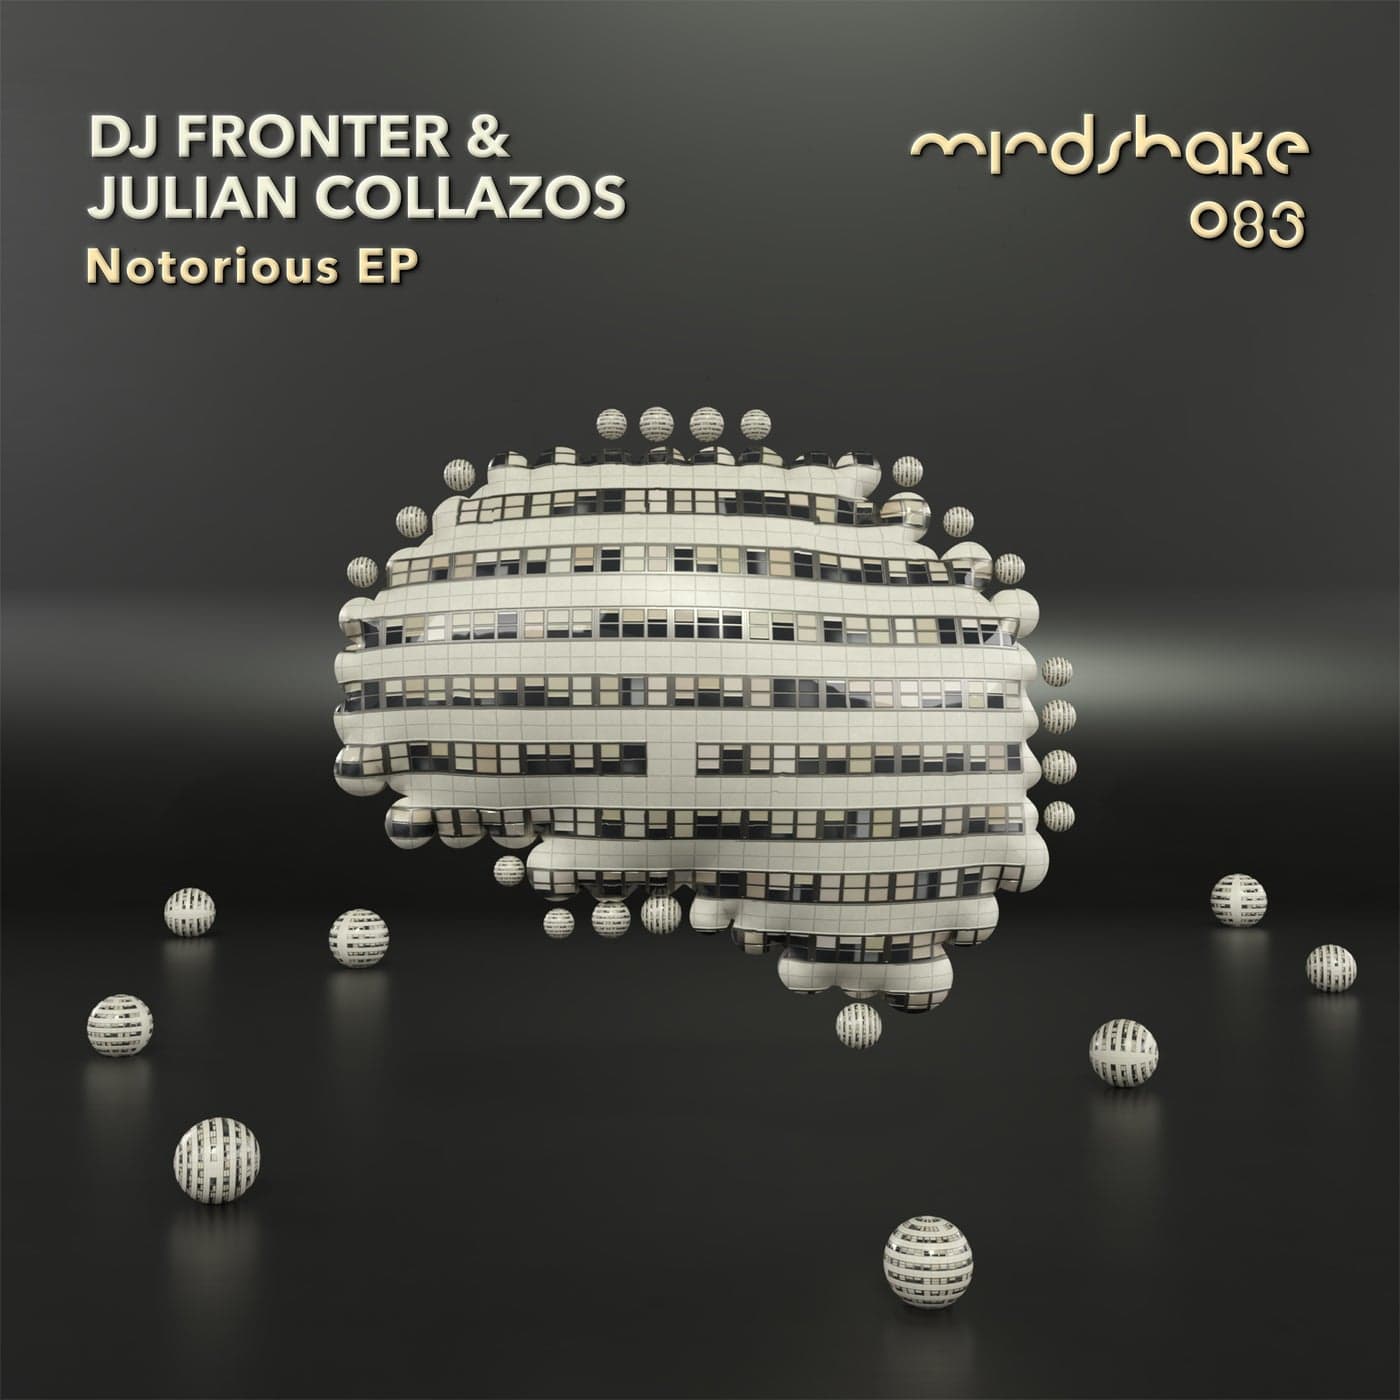 image cover: DJ Fronter, Julian Collazos - Notorious / MINDSHAKE083